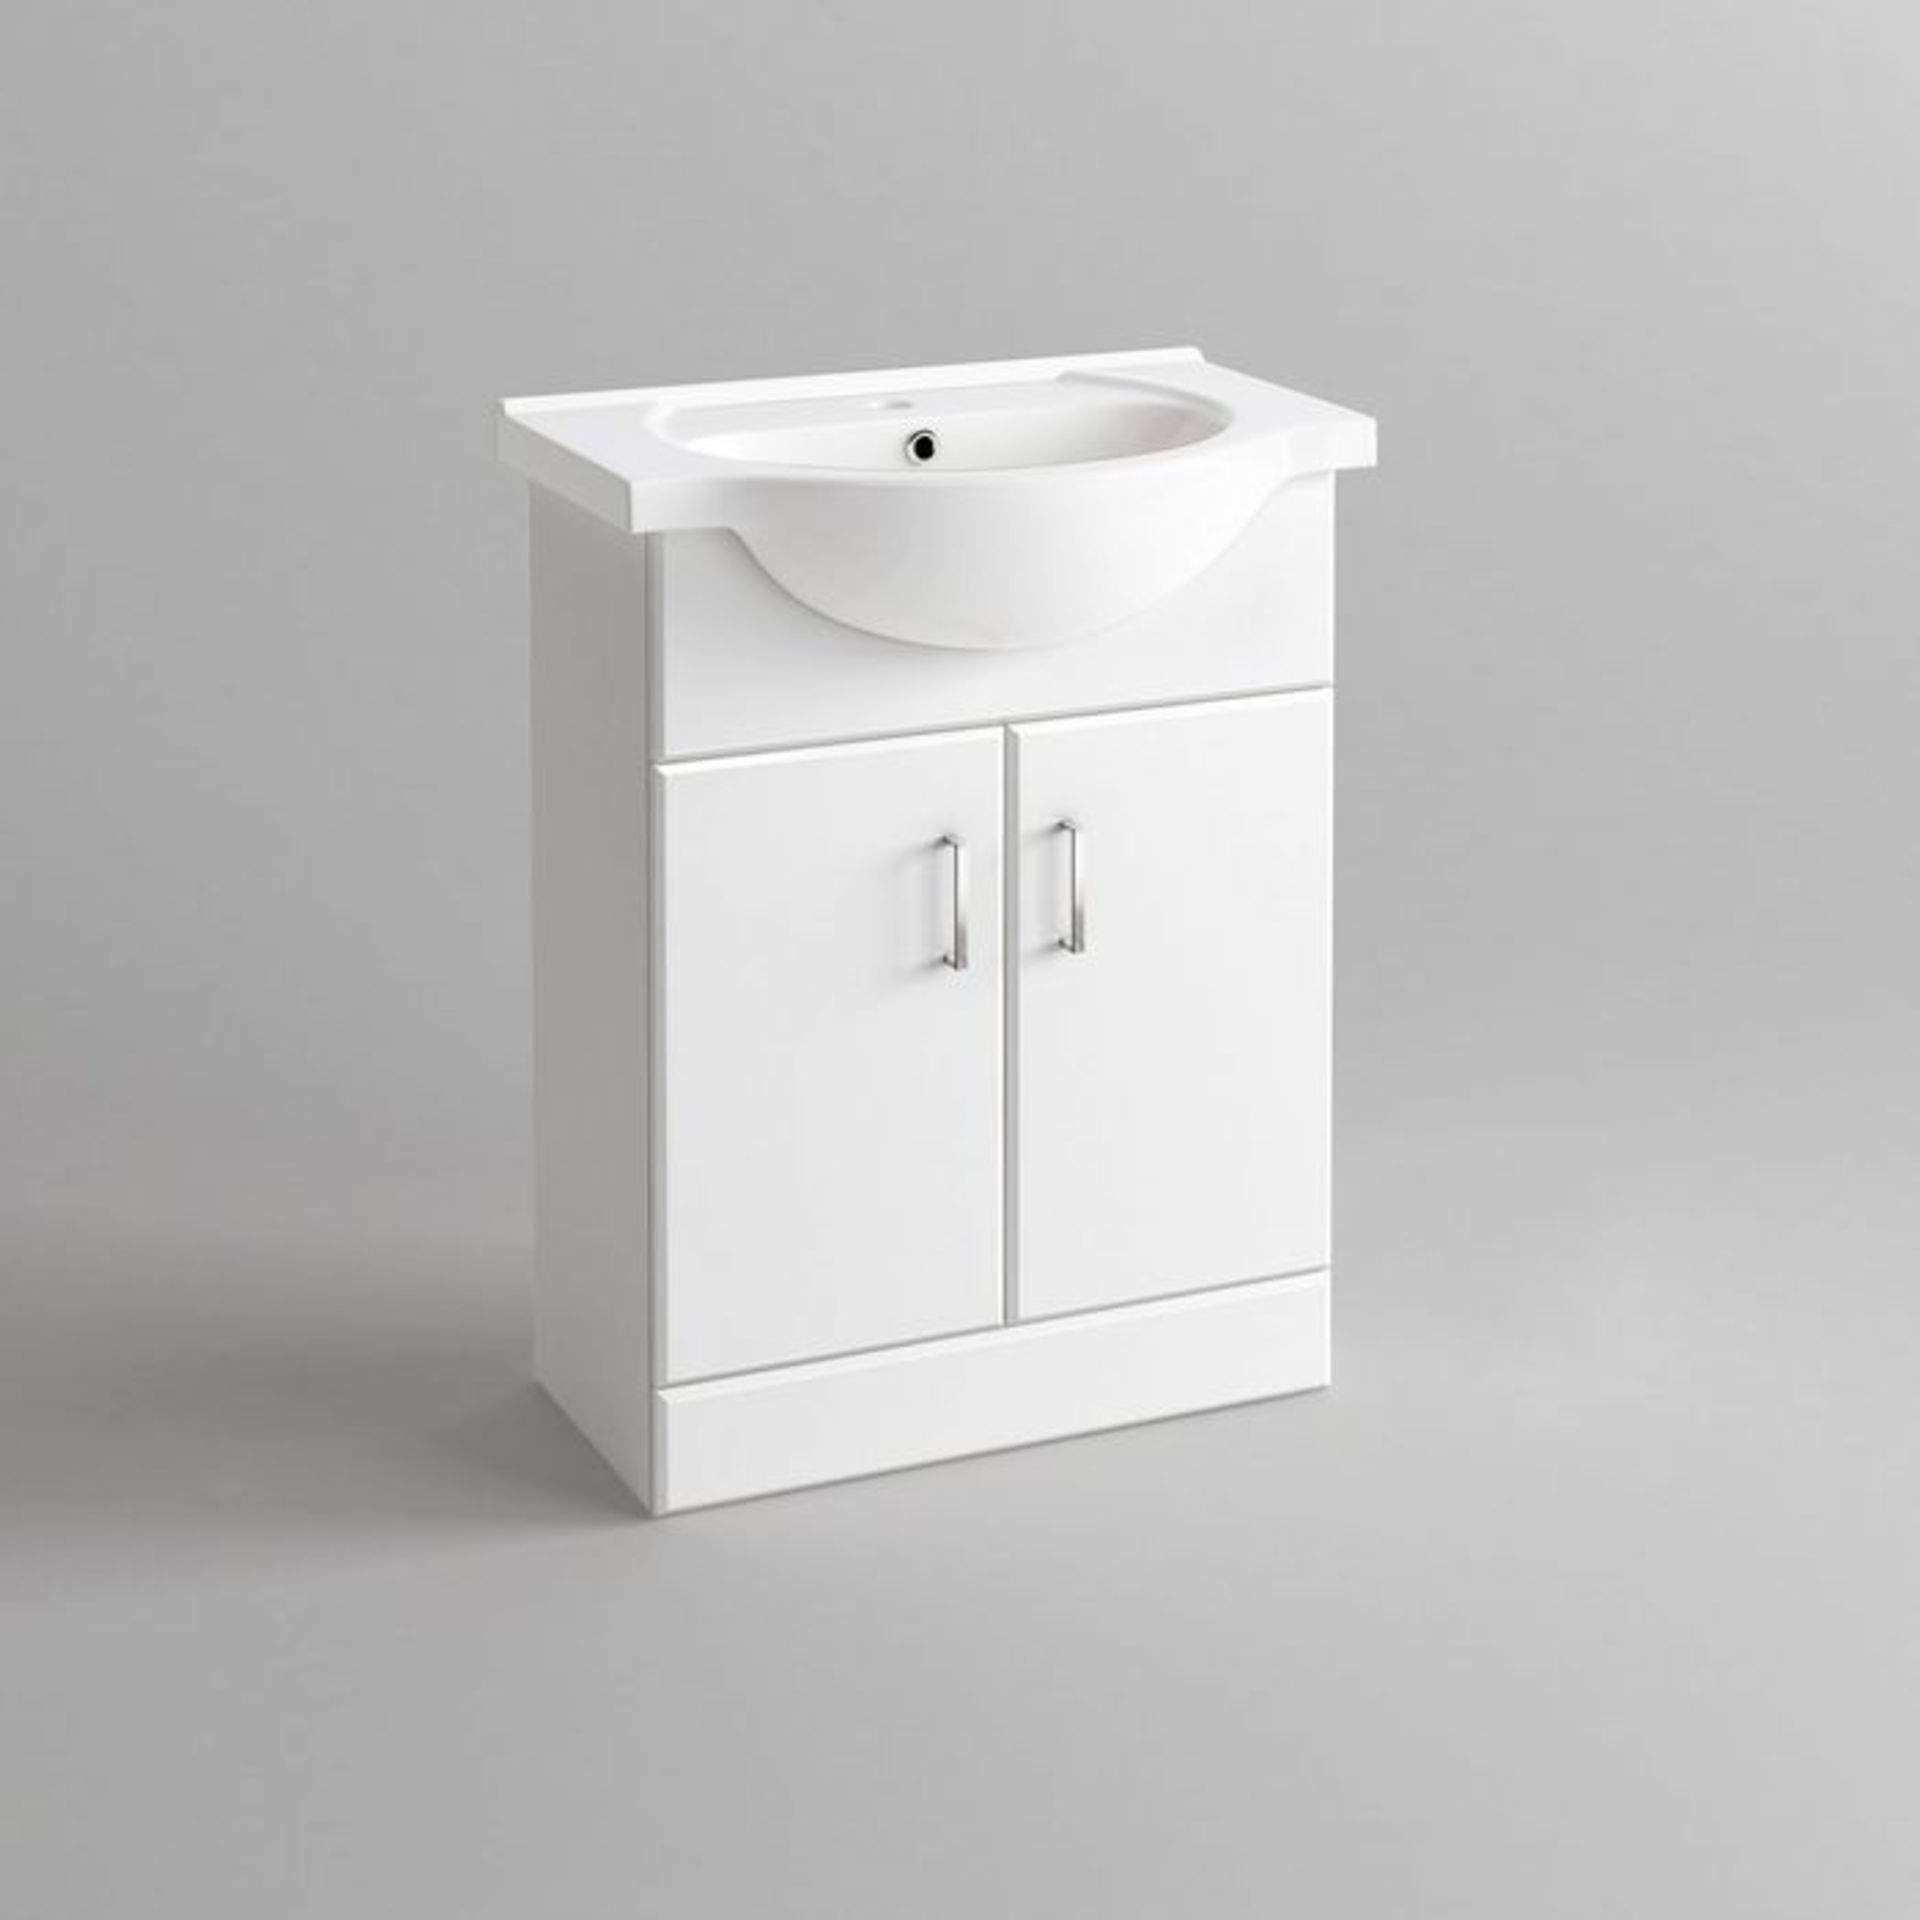 (AL155) 550x300mm Quartz Gloss White Built In Basin Cabinet. Pristine gloss white finish Great - Image 4 of 4